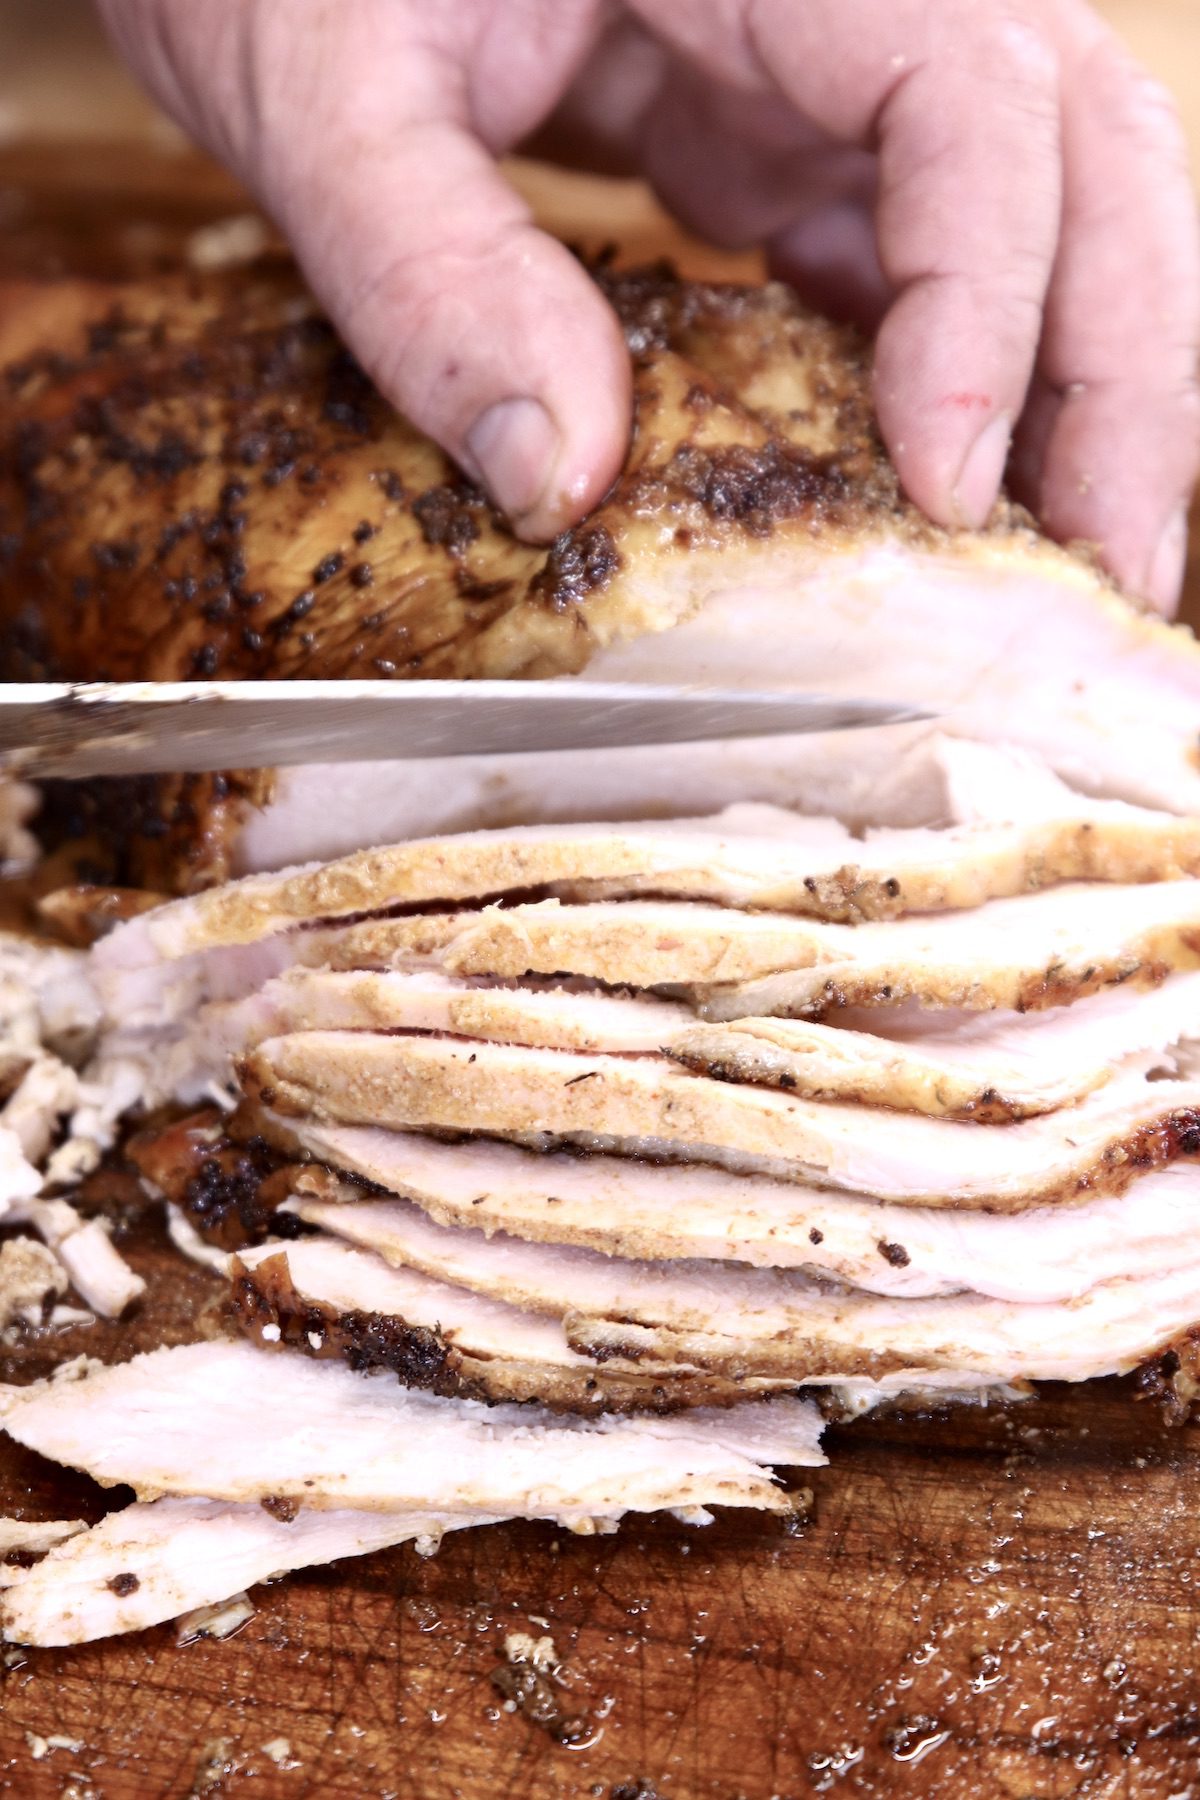 slicing turkey